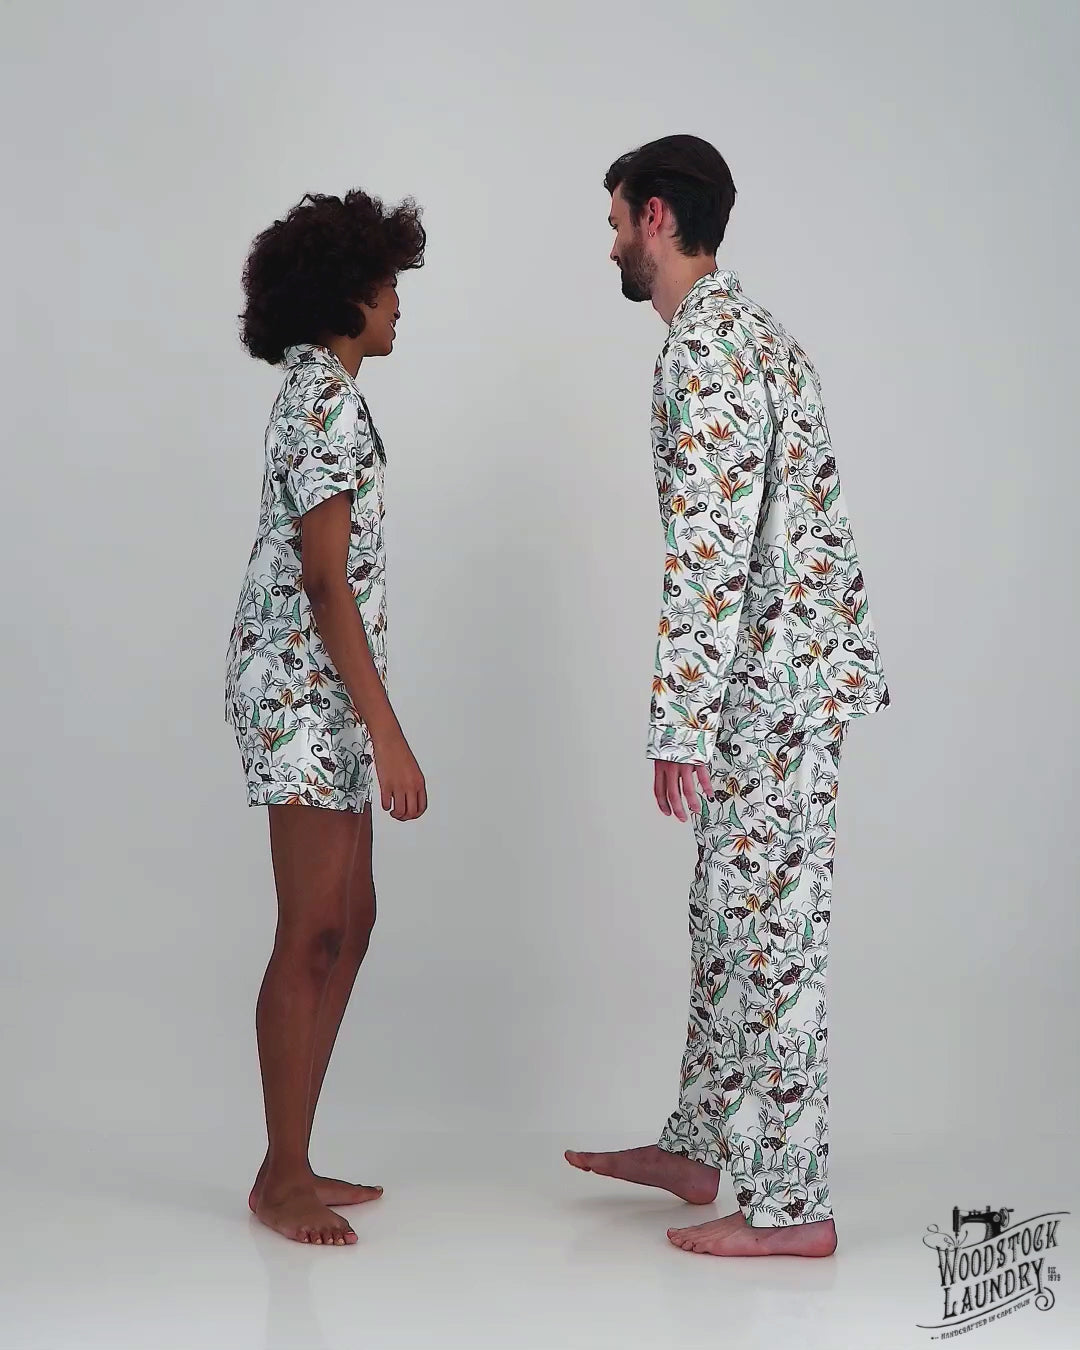 Matching pyjamas couple